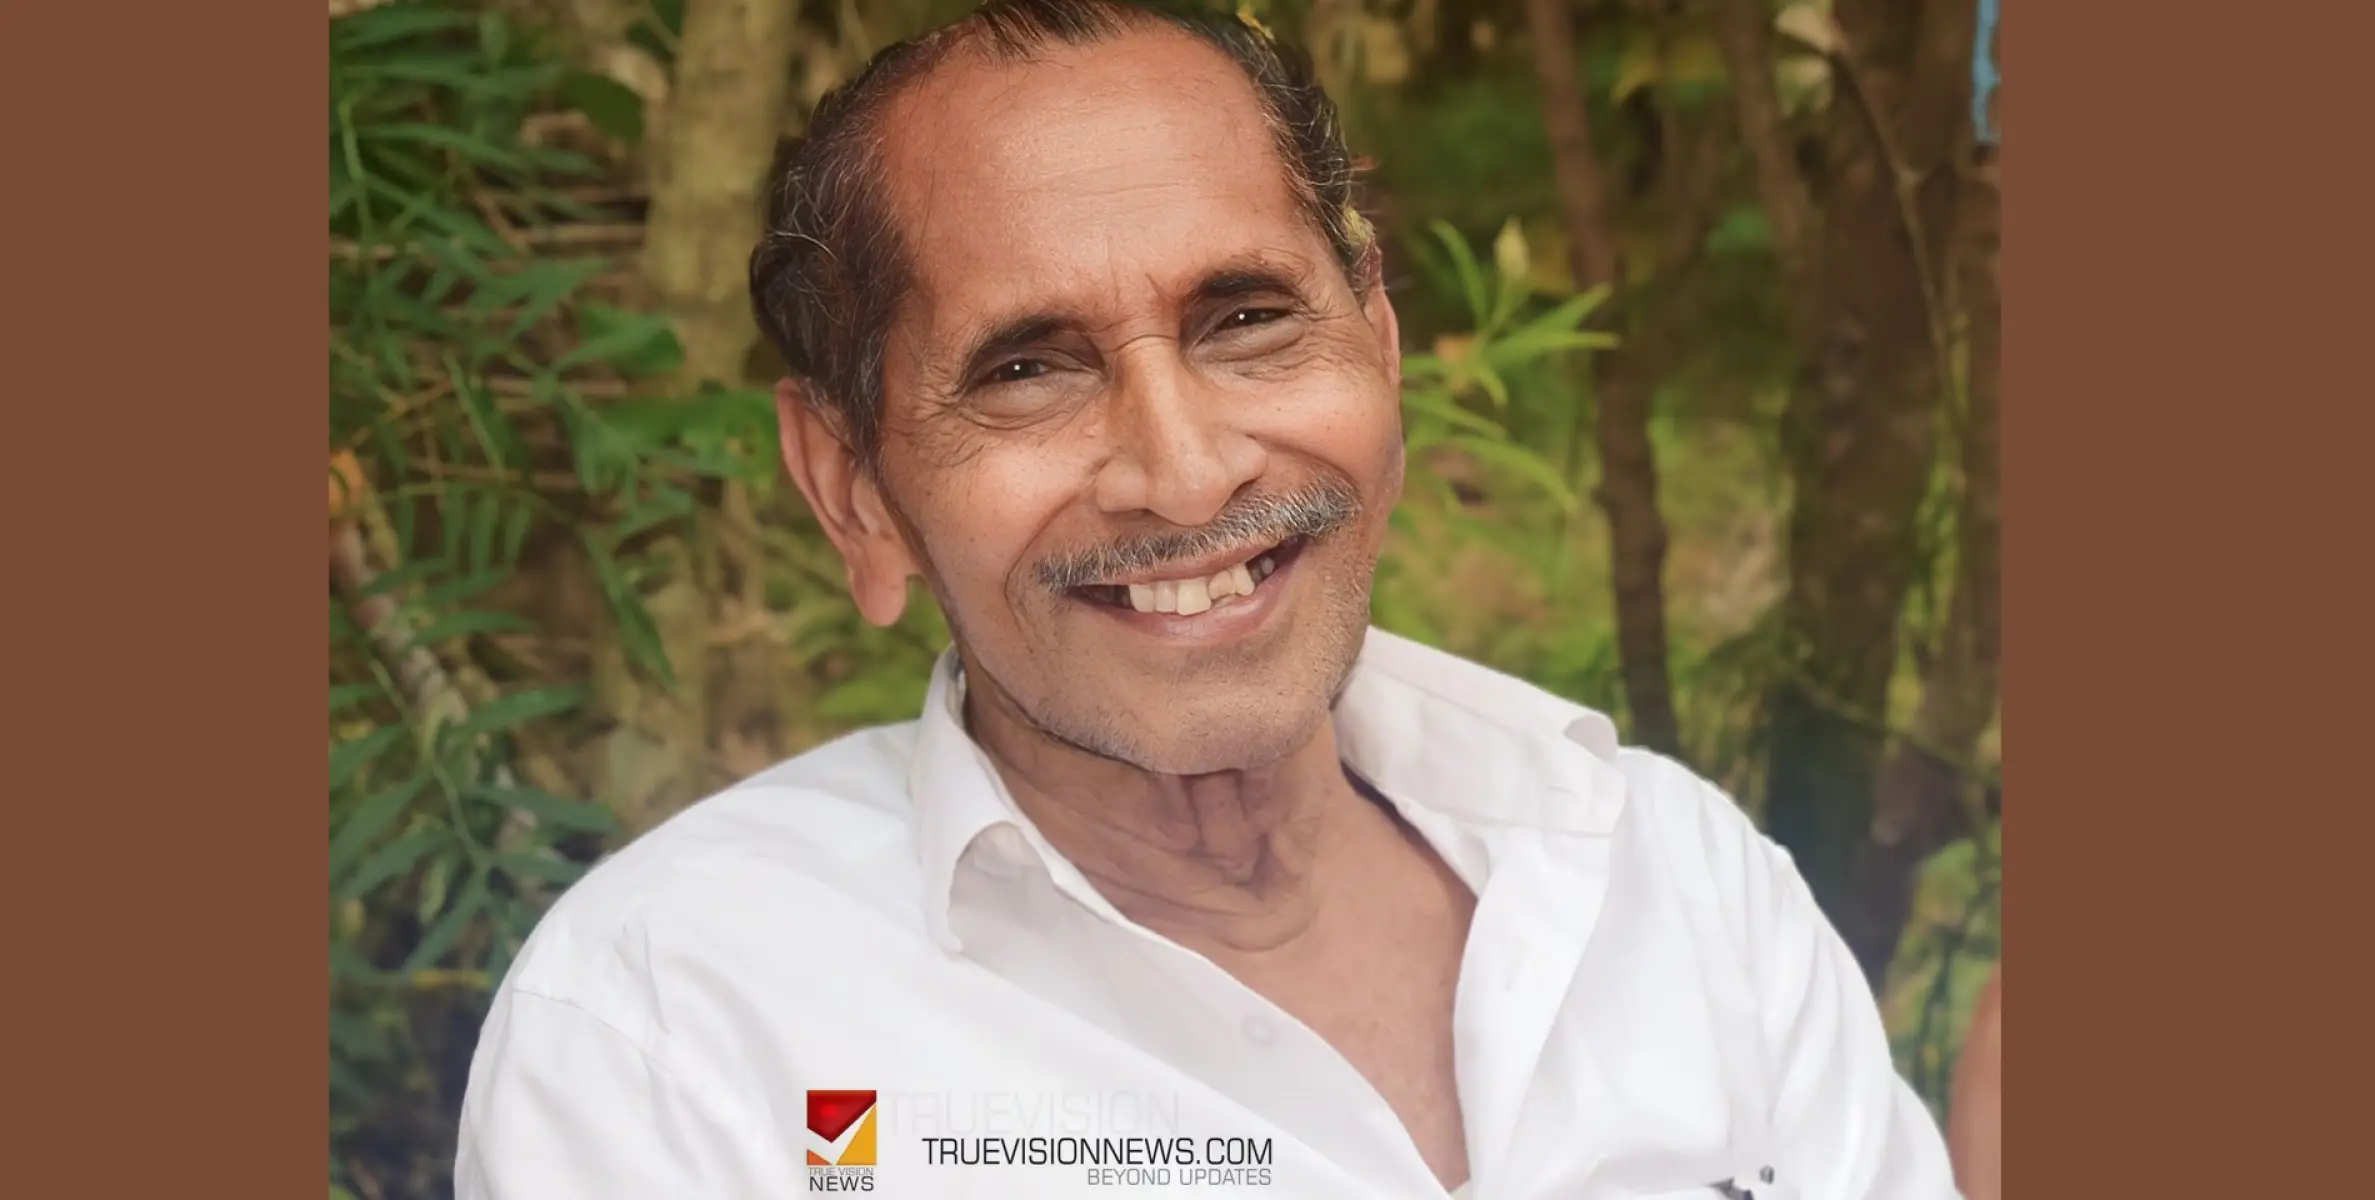 #obituary | ചെറുവങ്ങാട്ട് കുനിയിൽ കൃഷ്ണൻ അന്തരിച്ചു 